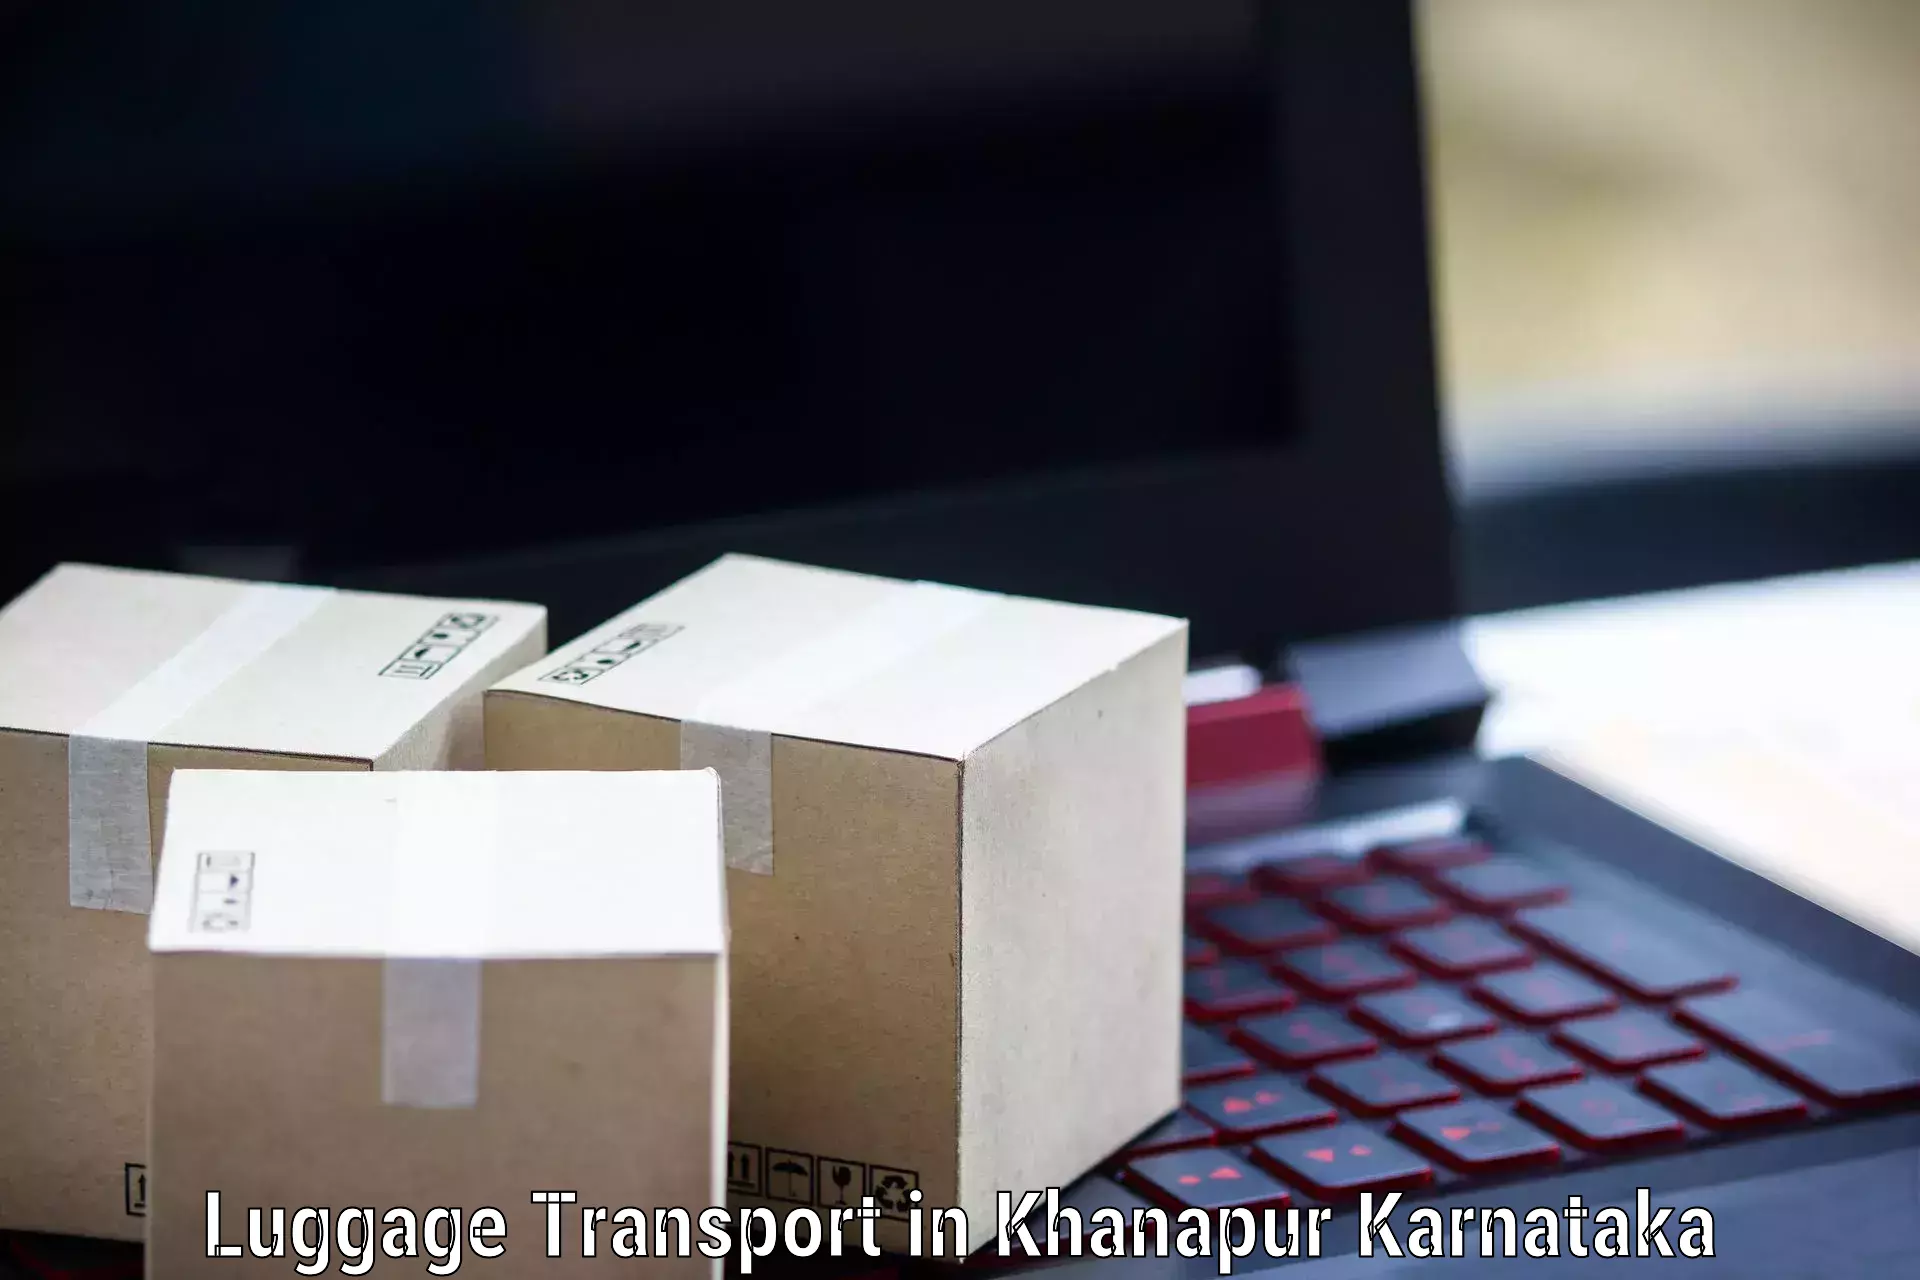 Luggage transport deals in Khanapur Karnataka